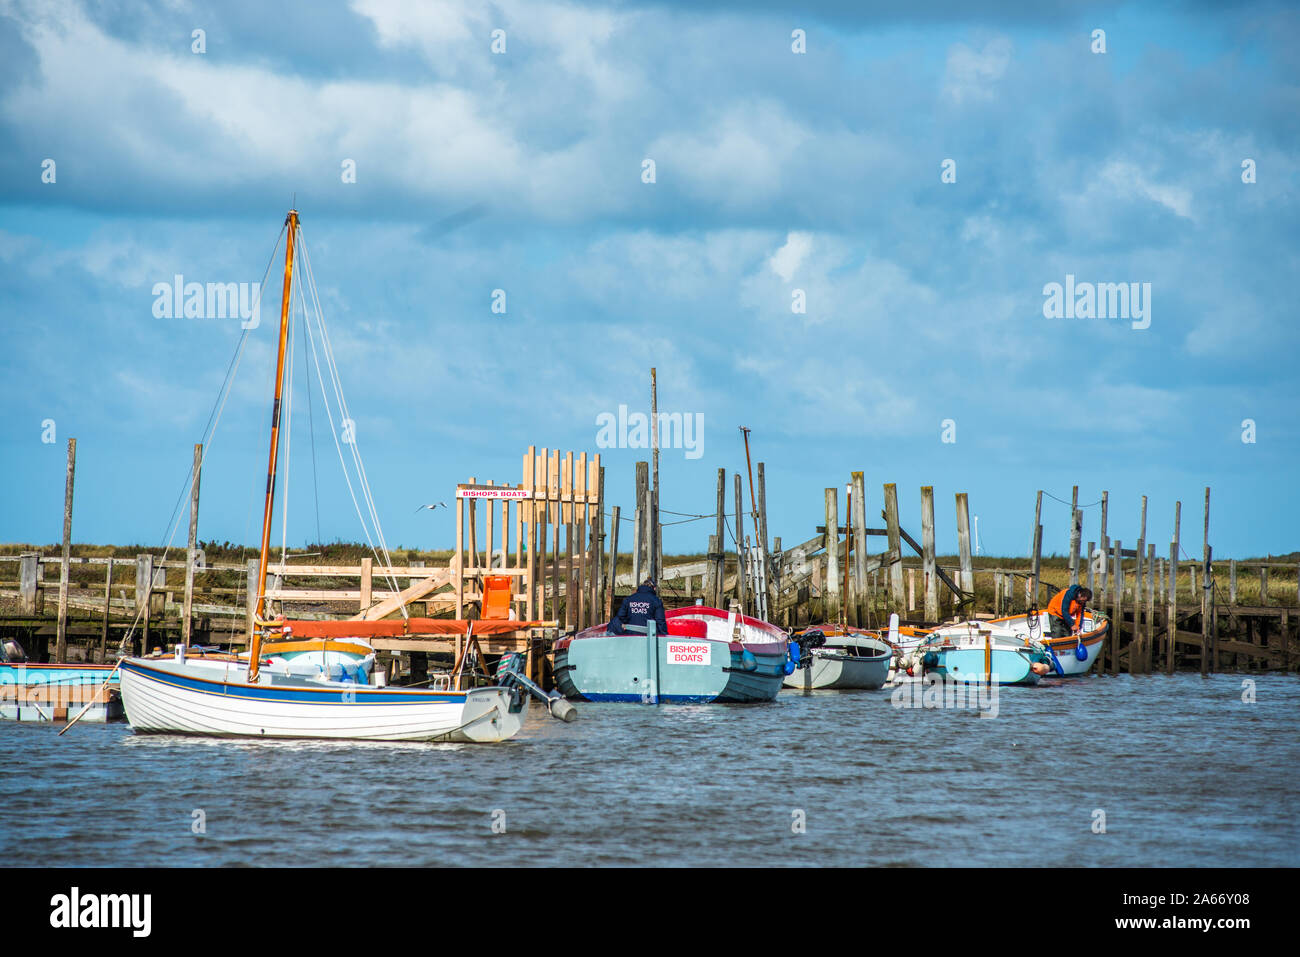 Boats at Morston Quay on North Norfolk coast in East Anglia, England, UK. Stock Photo